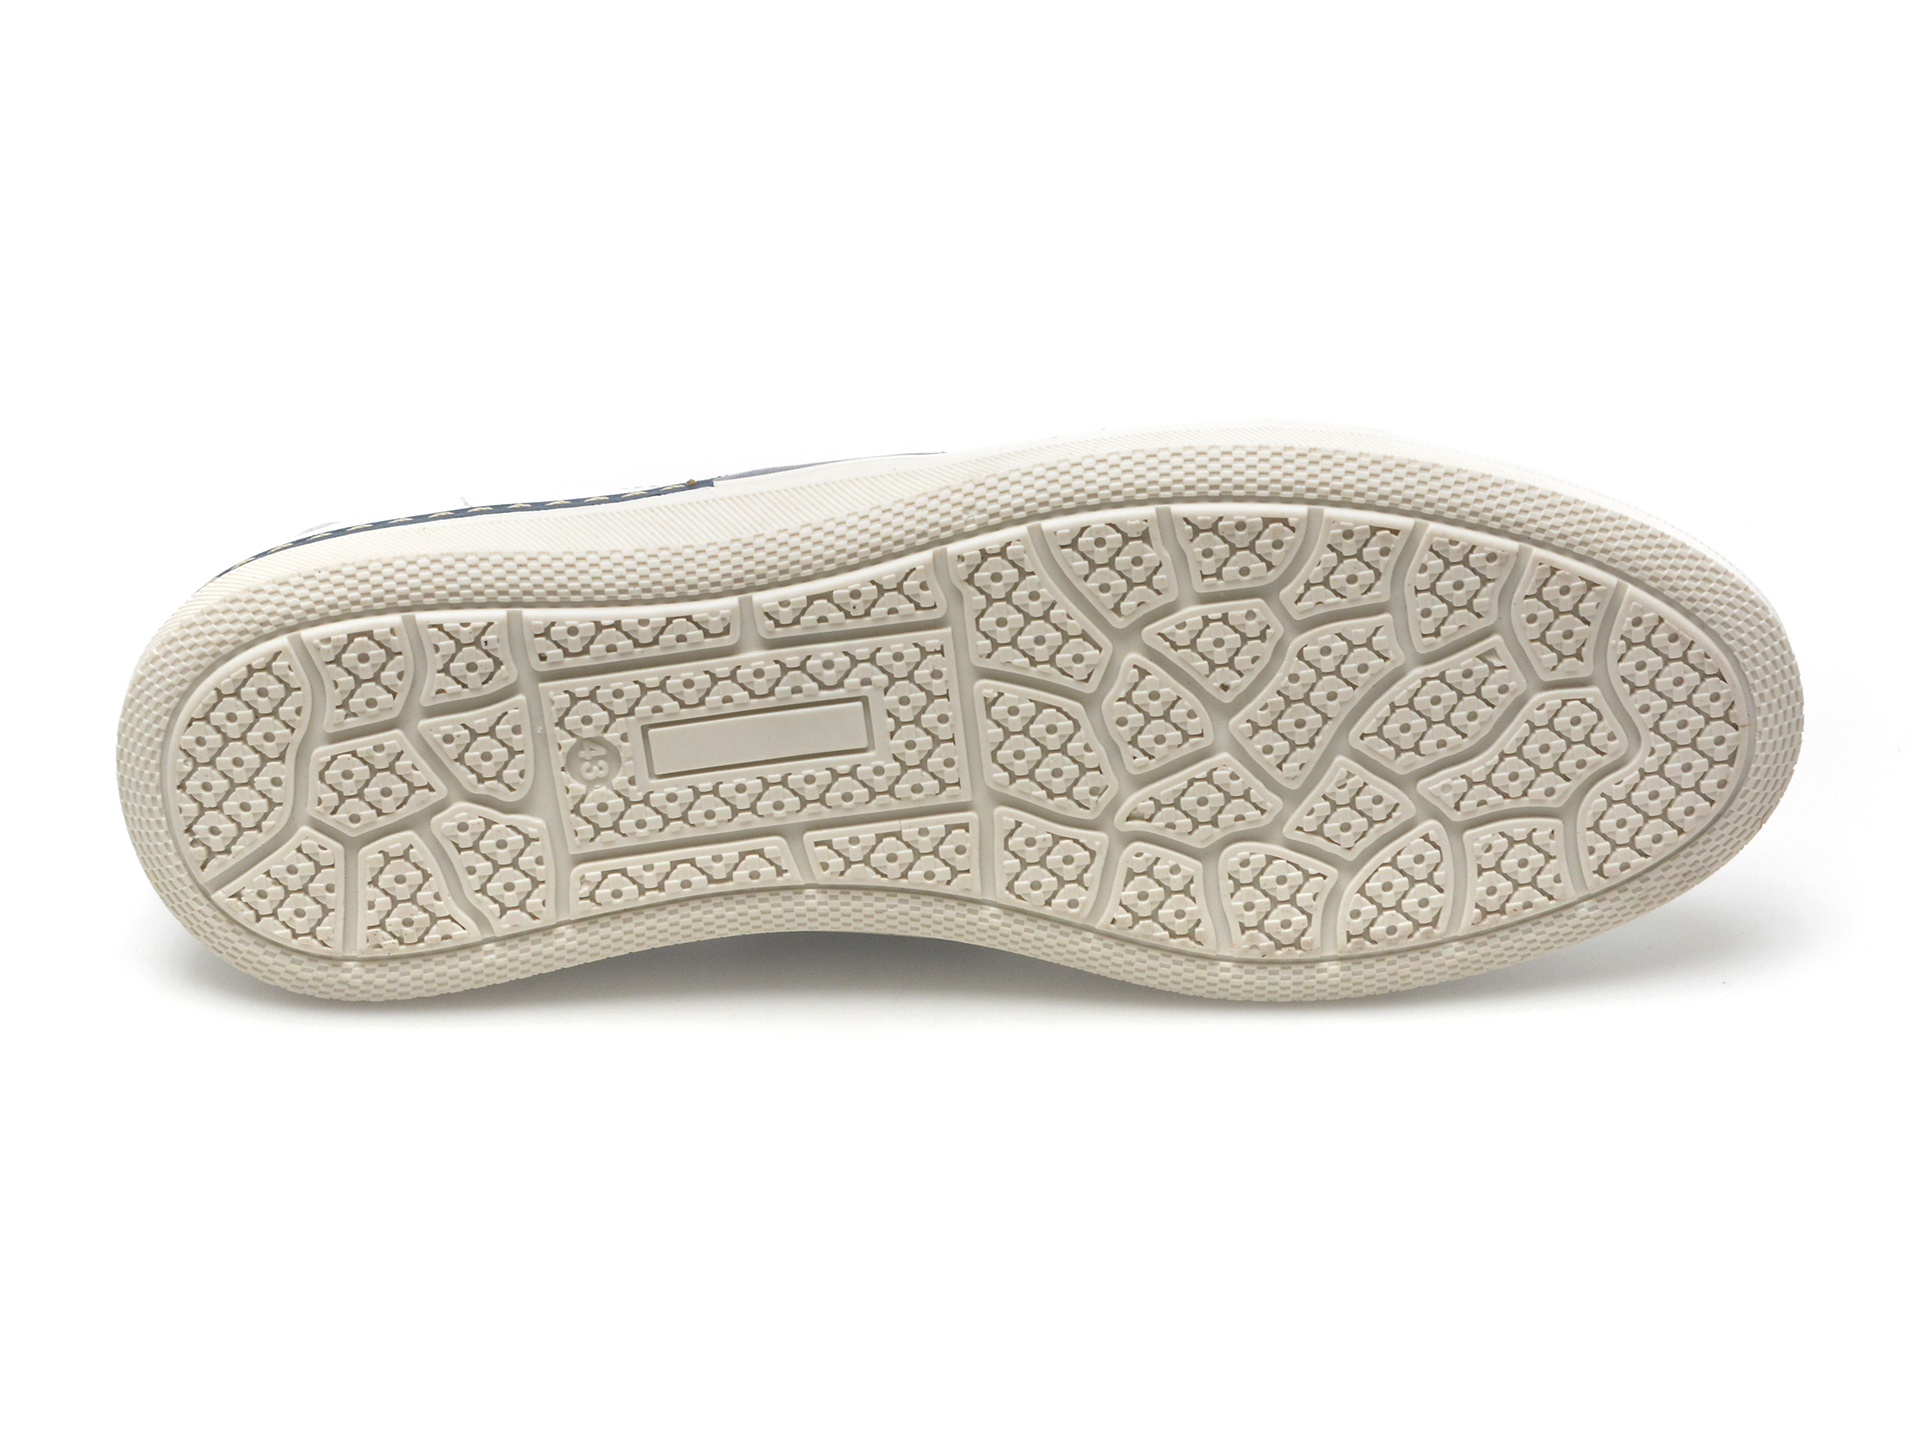 Pantofi sport OTTER albi, 3425, din piele naturala